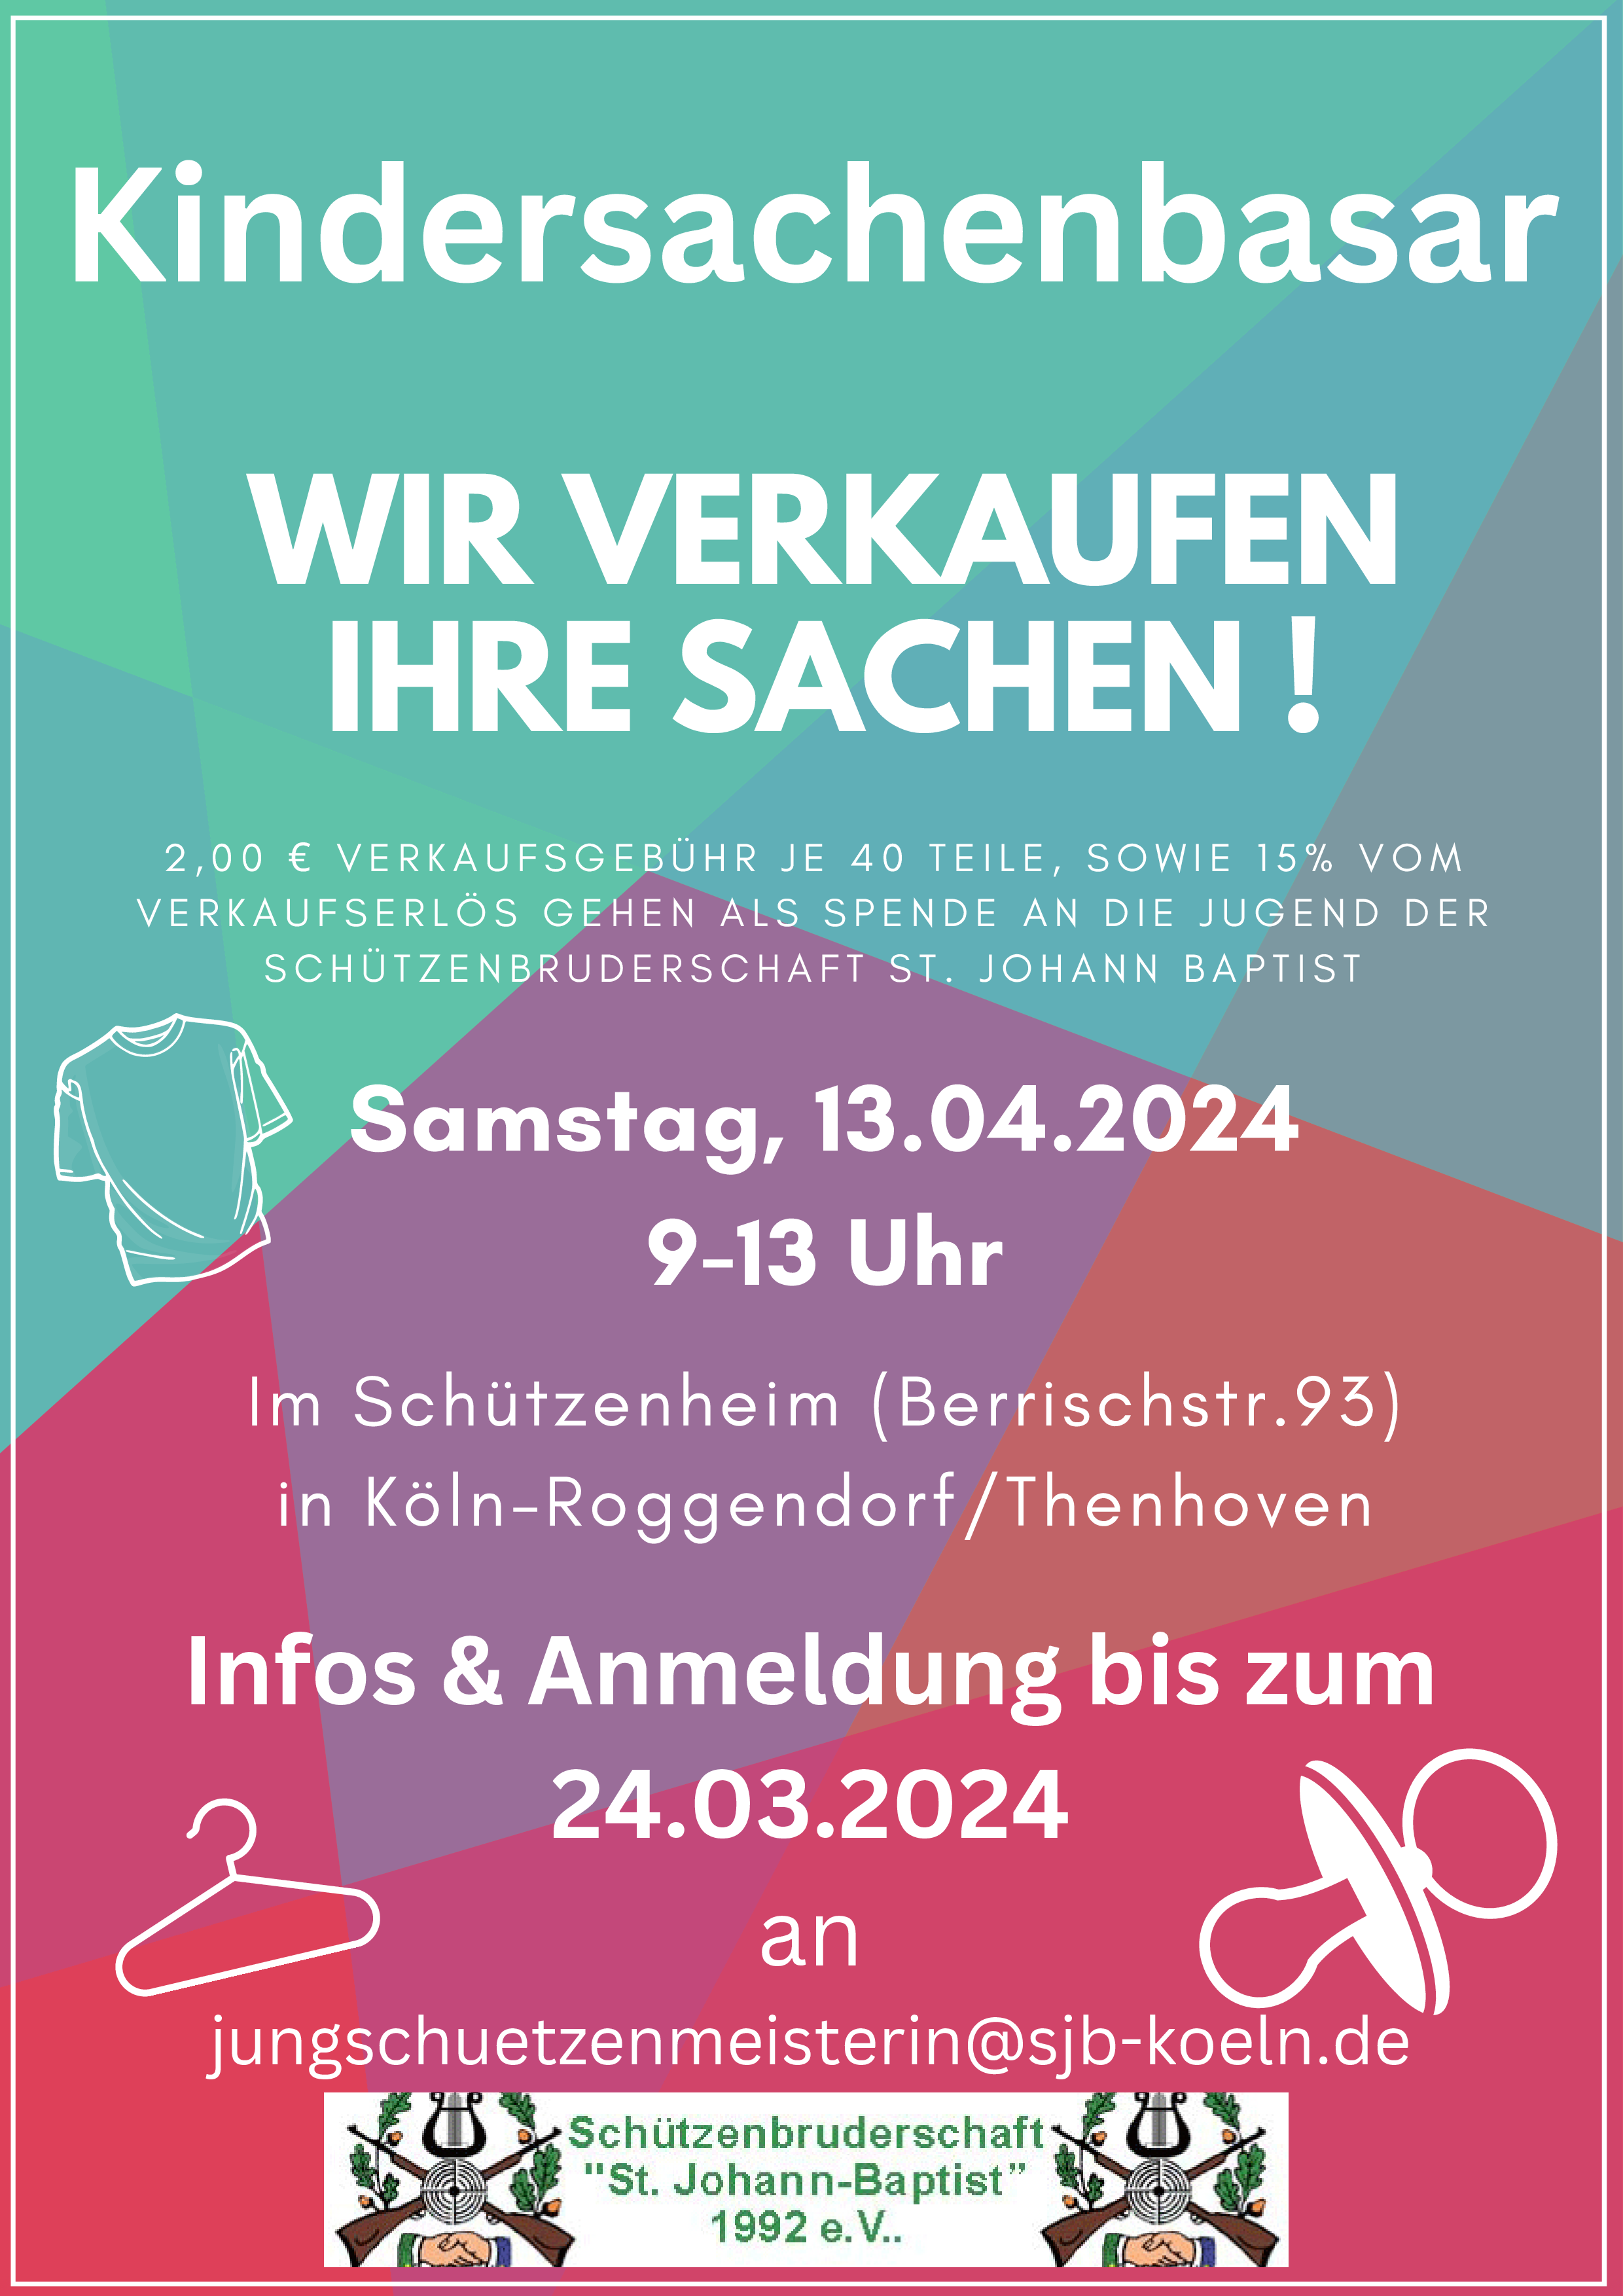 Kindersachenbasar am 13.04.2024 im Schützenheim